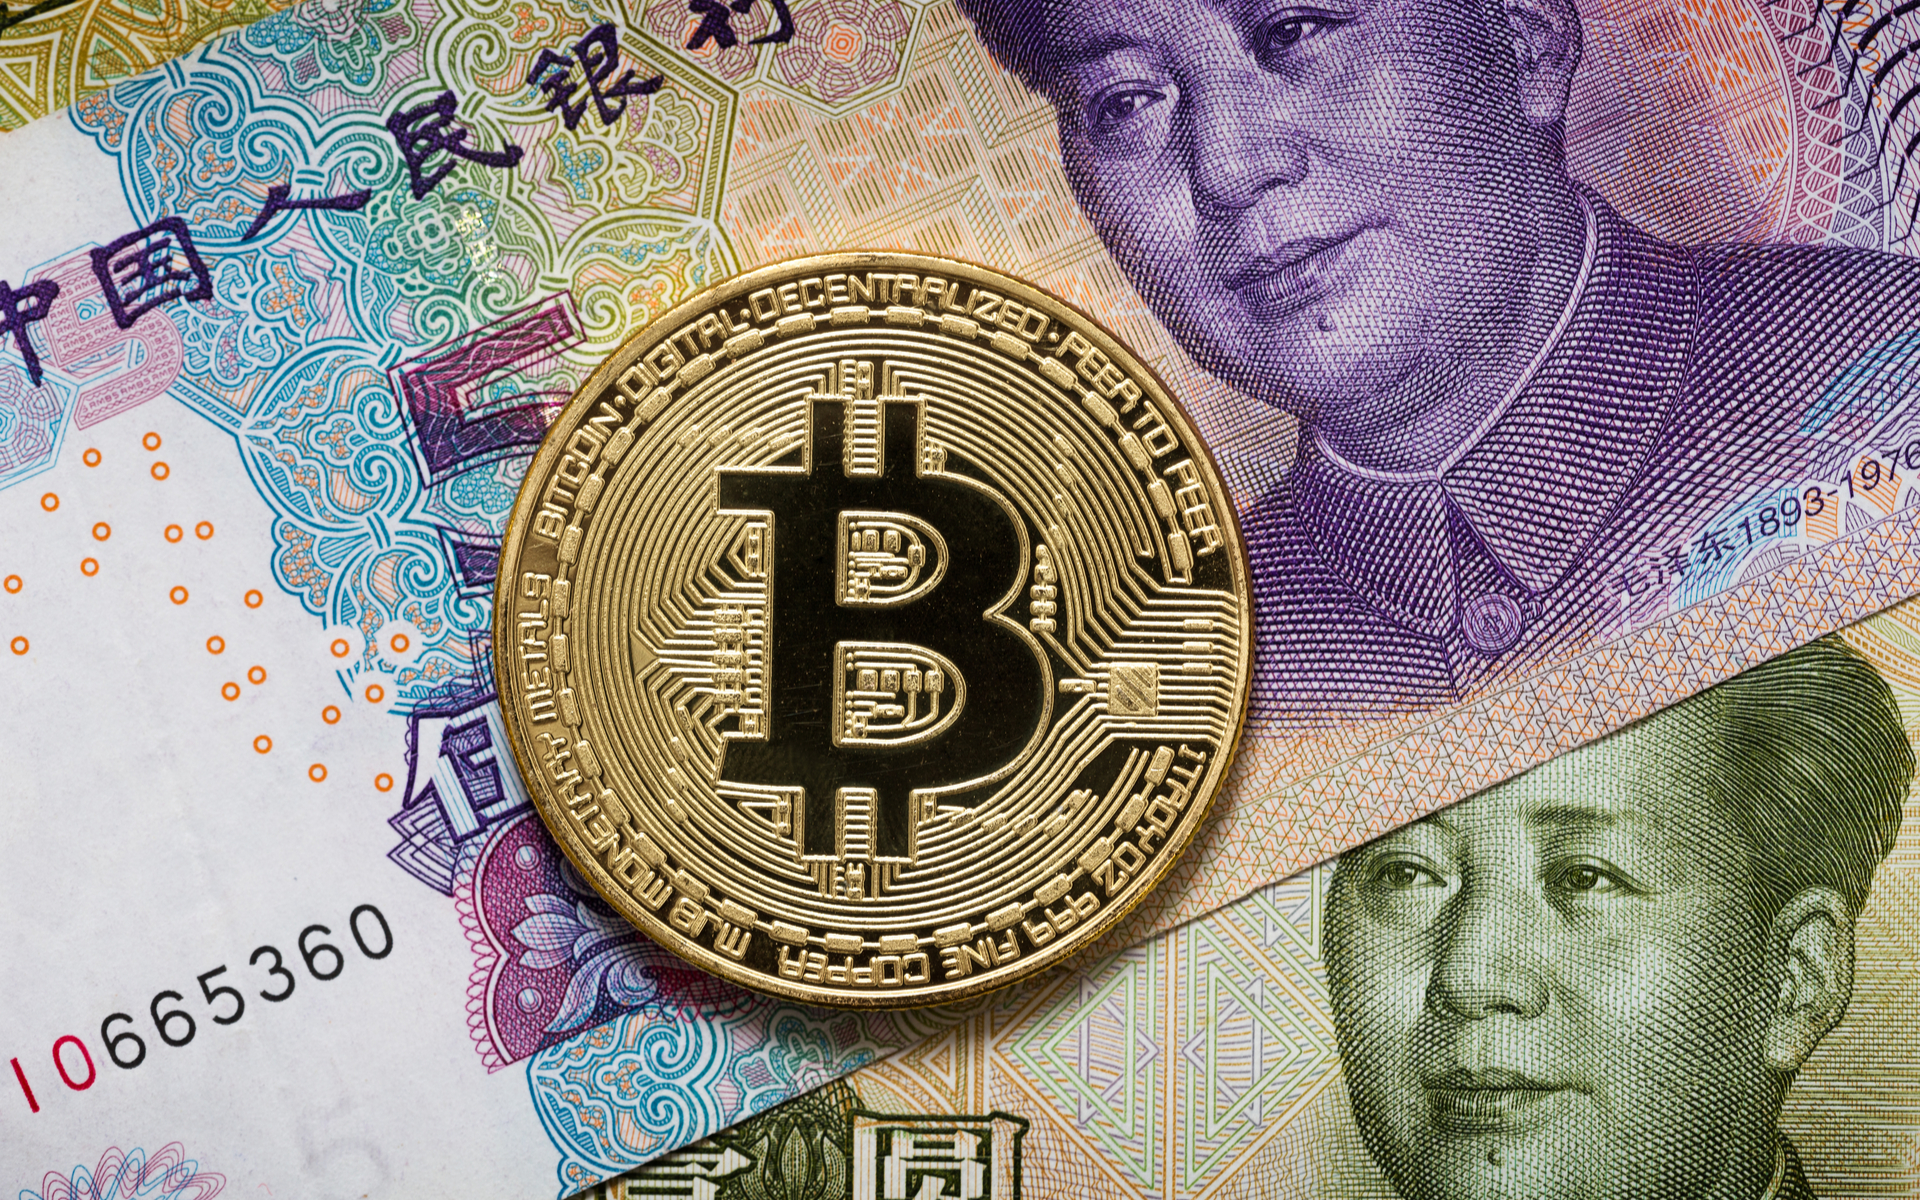 bitcoin and cny yuan